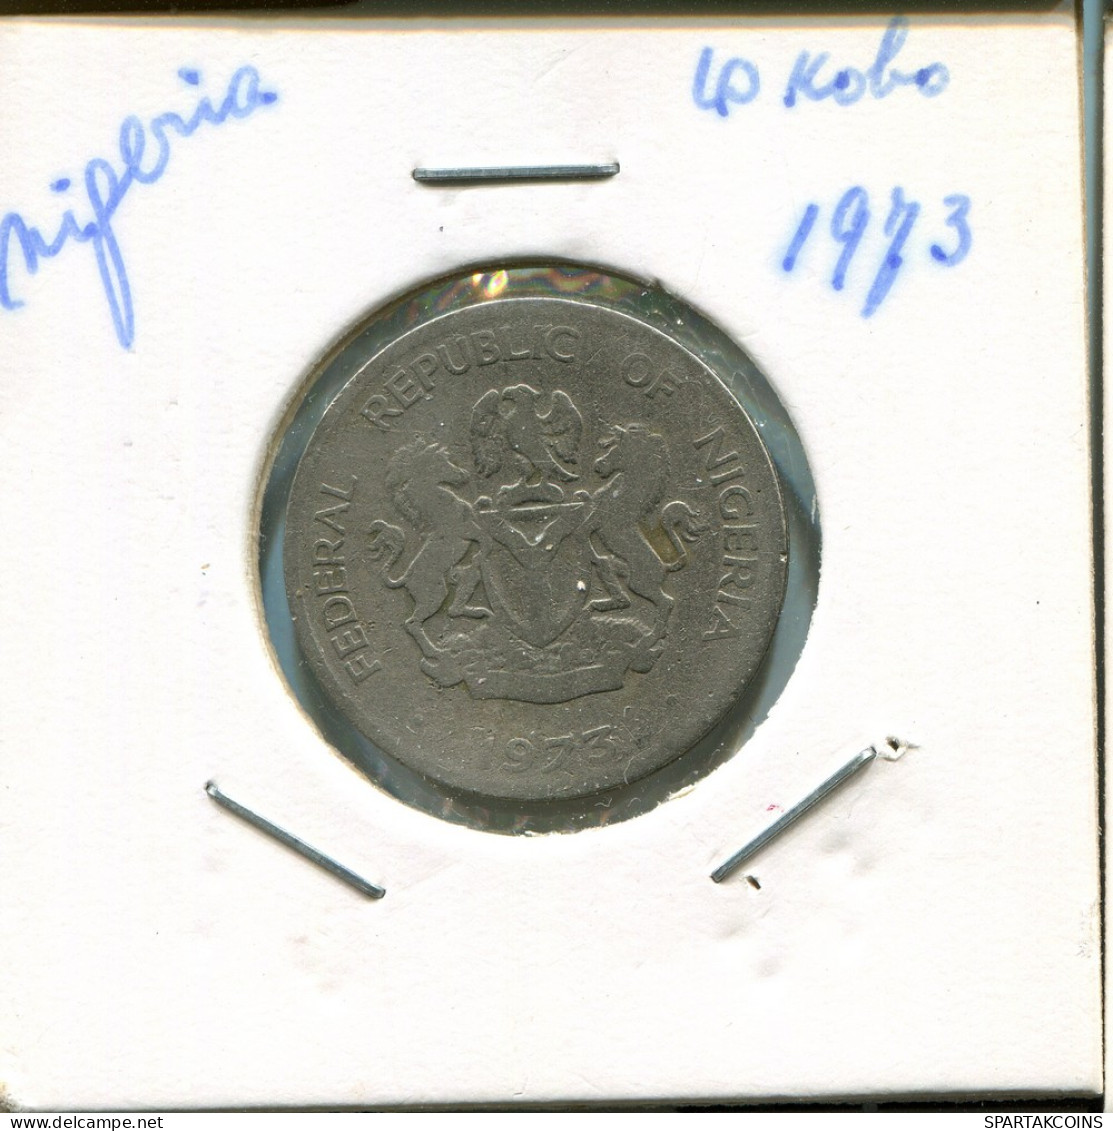 10 KOBO 1973 NIGERIA Coin #AN734.U - Nigeria